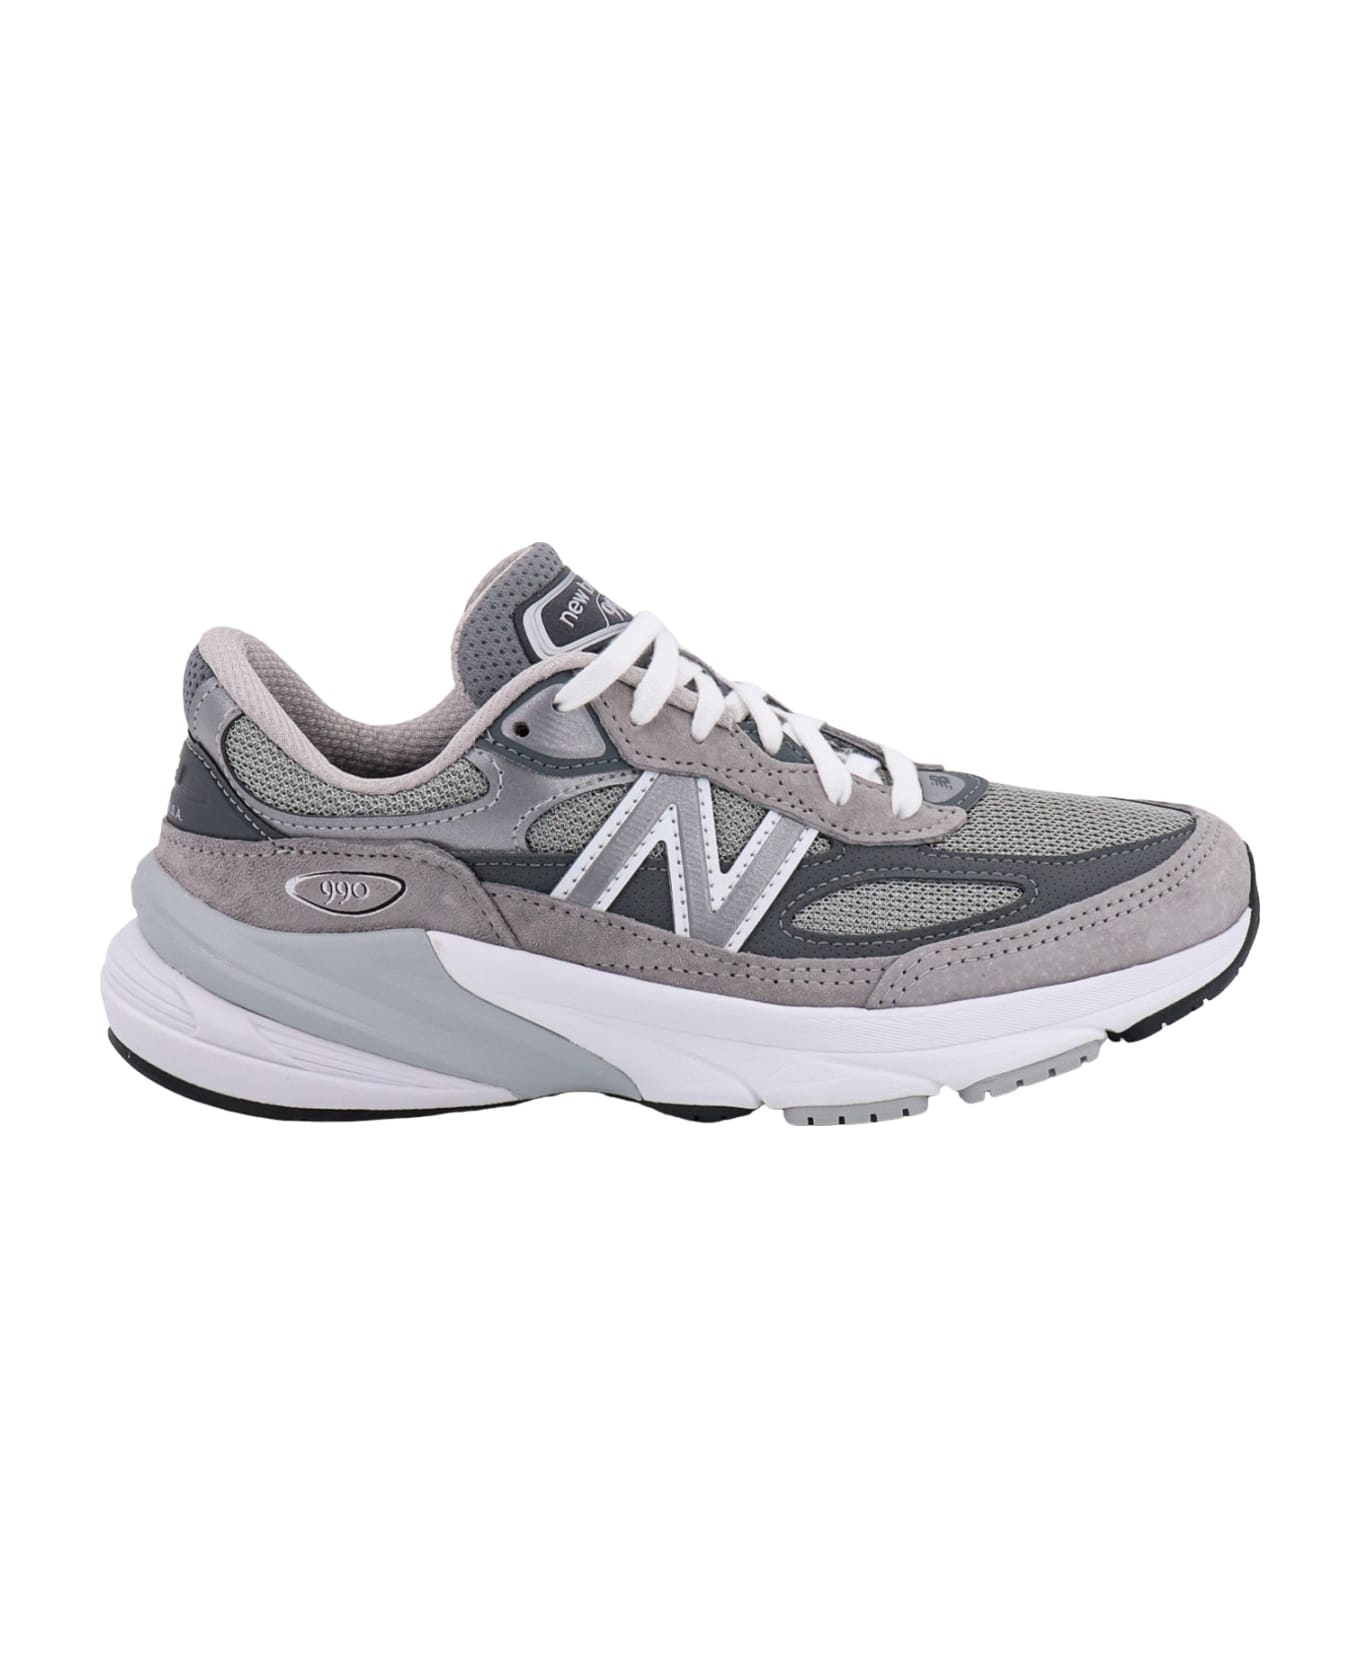 New Balance 990 Sneakers - Grey